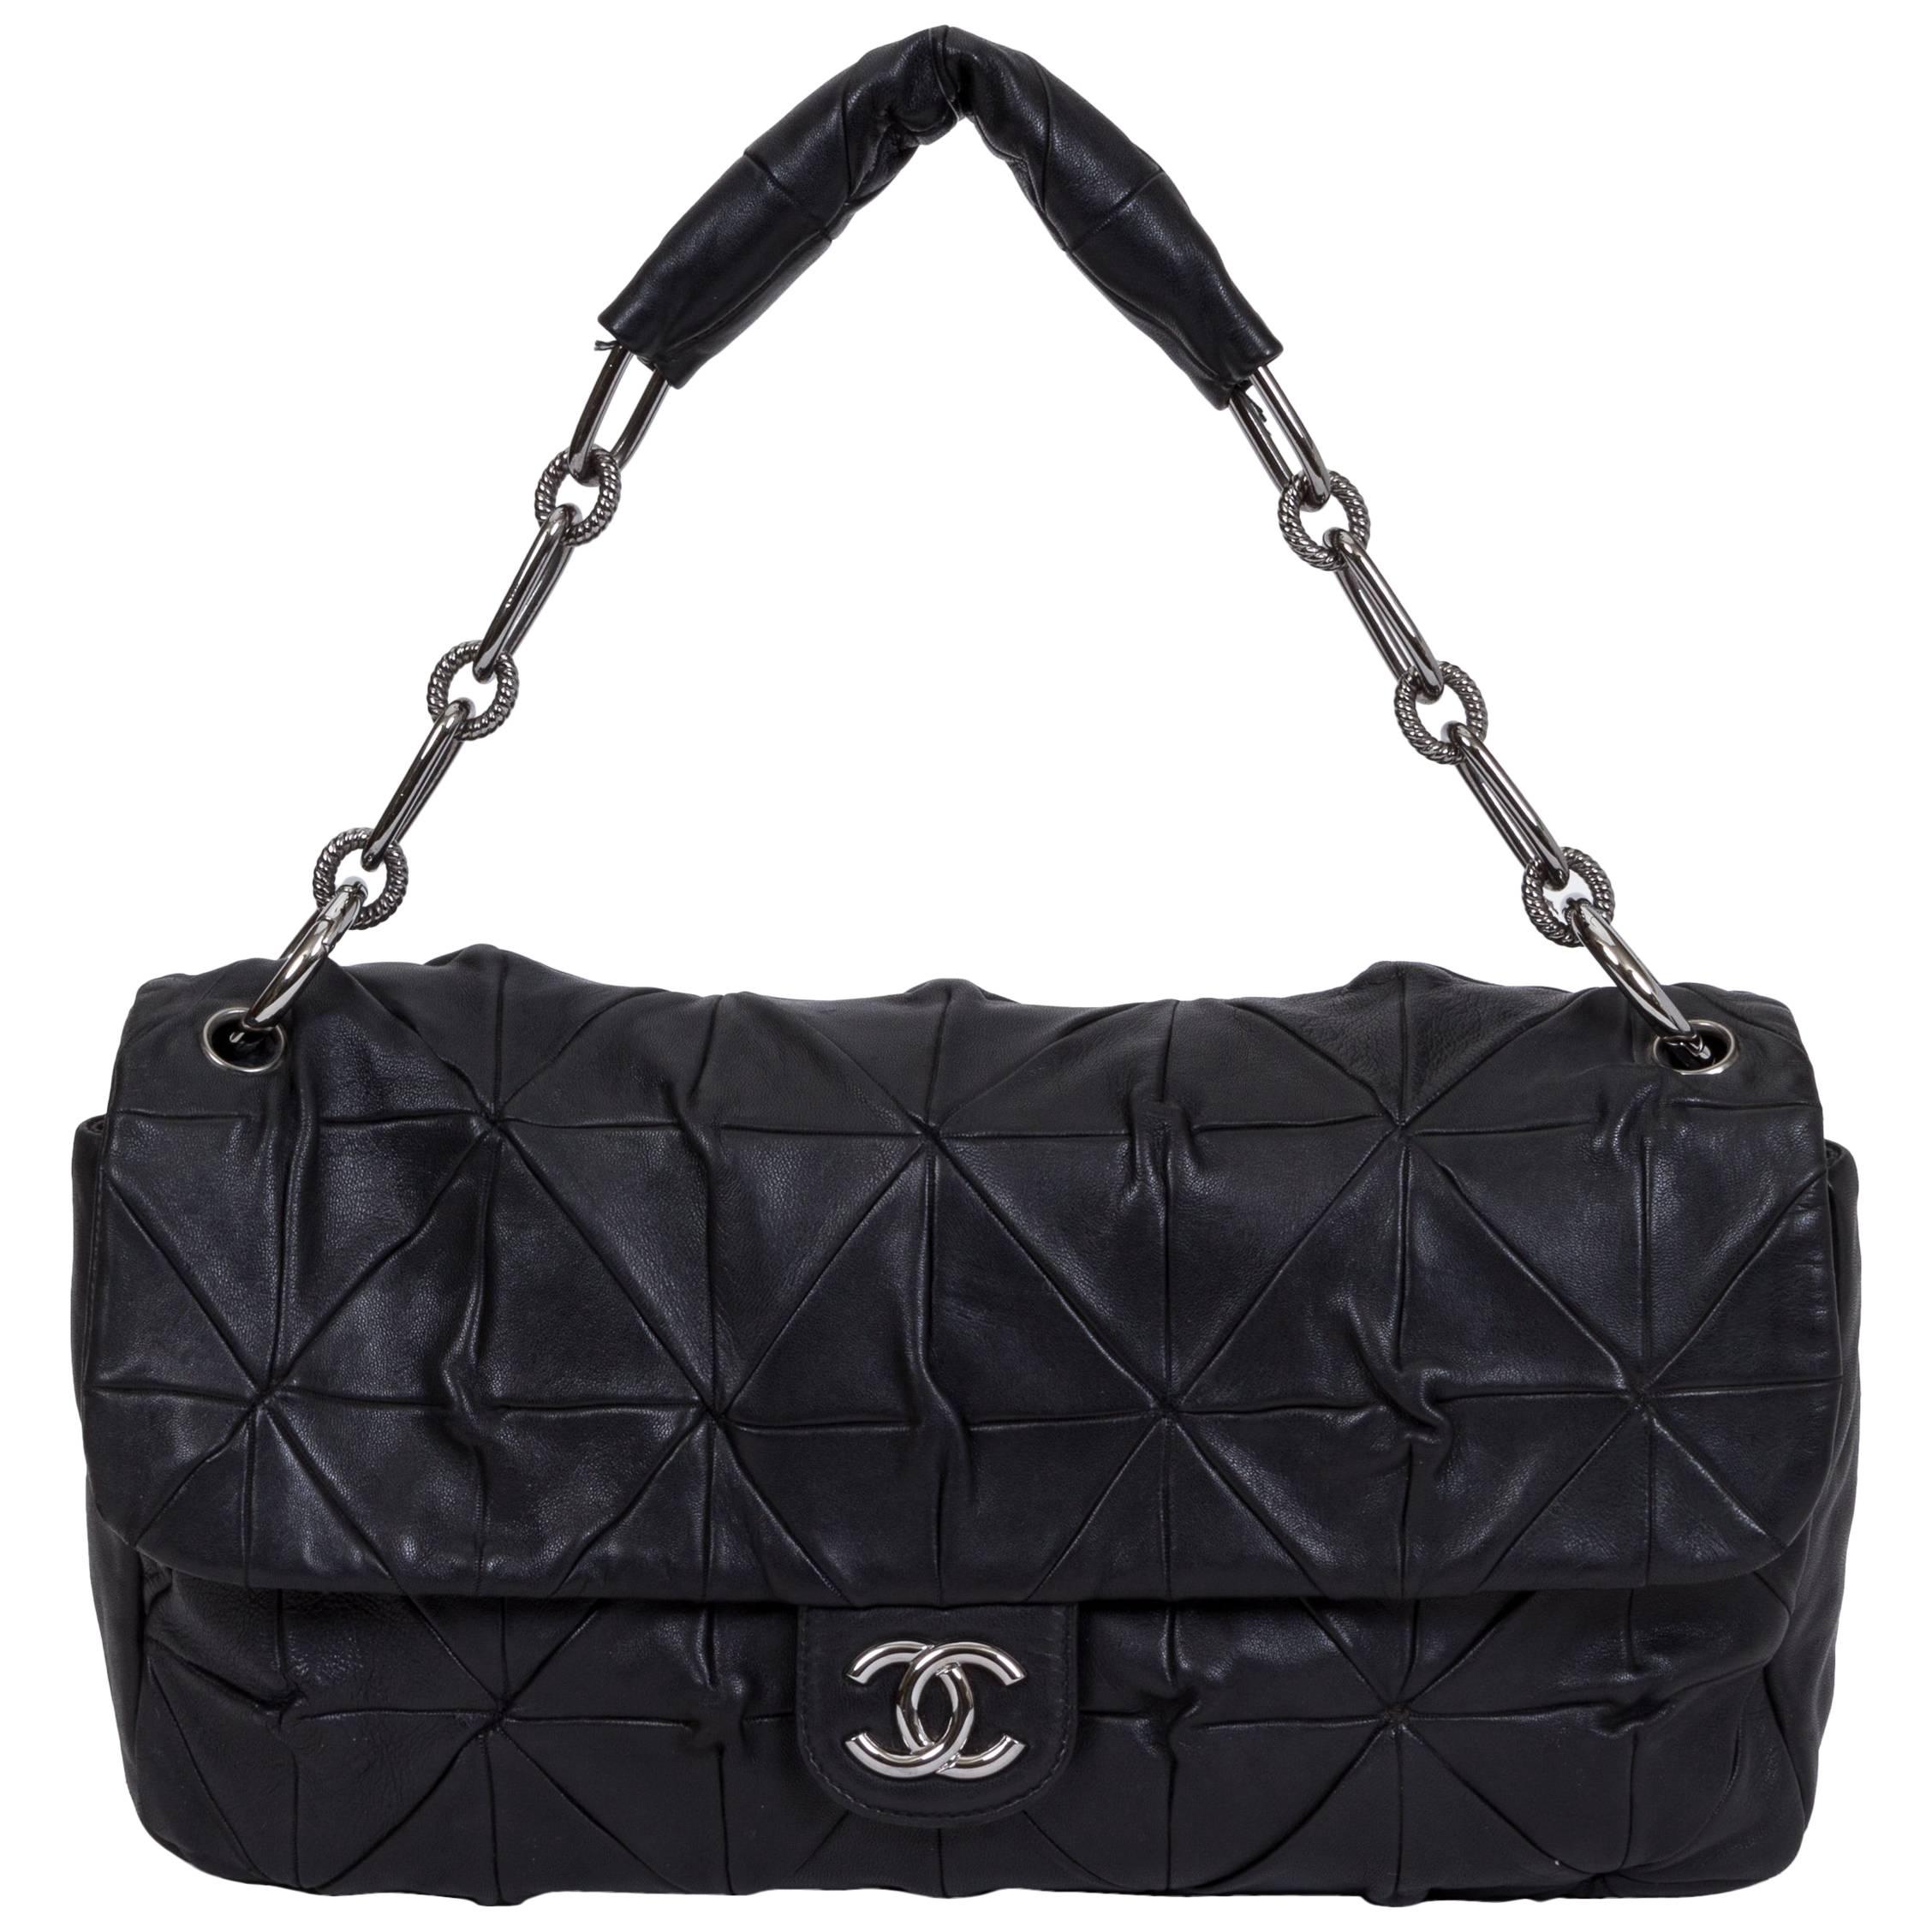 Chanel Maxi Black Leather Origami Flap Bag